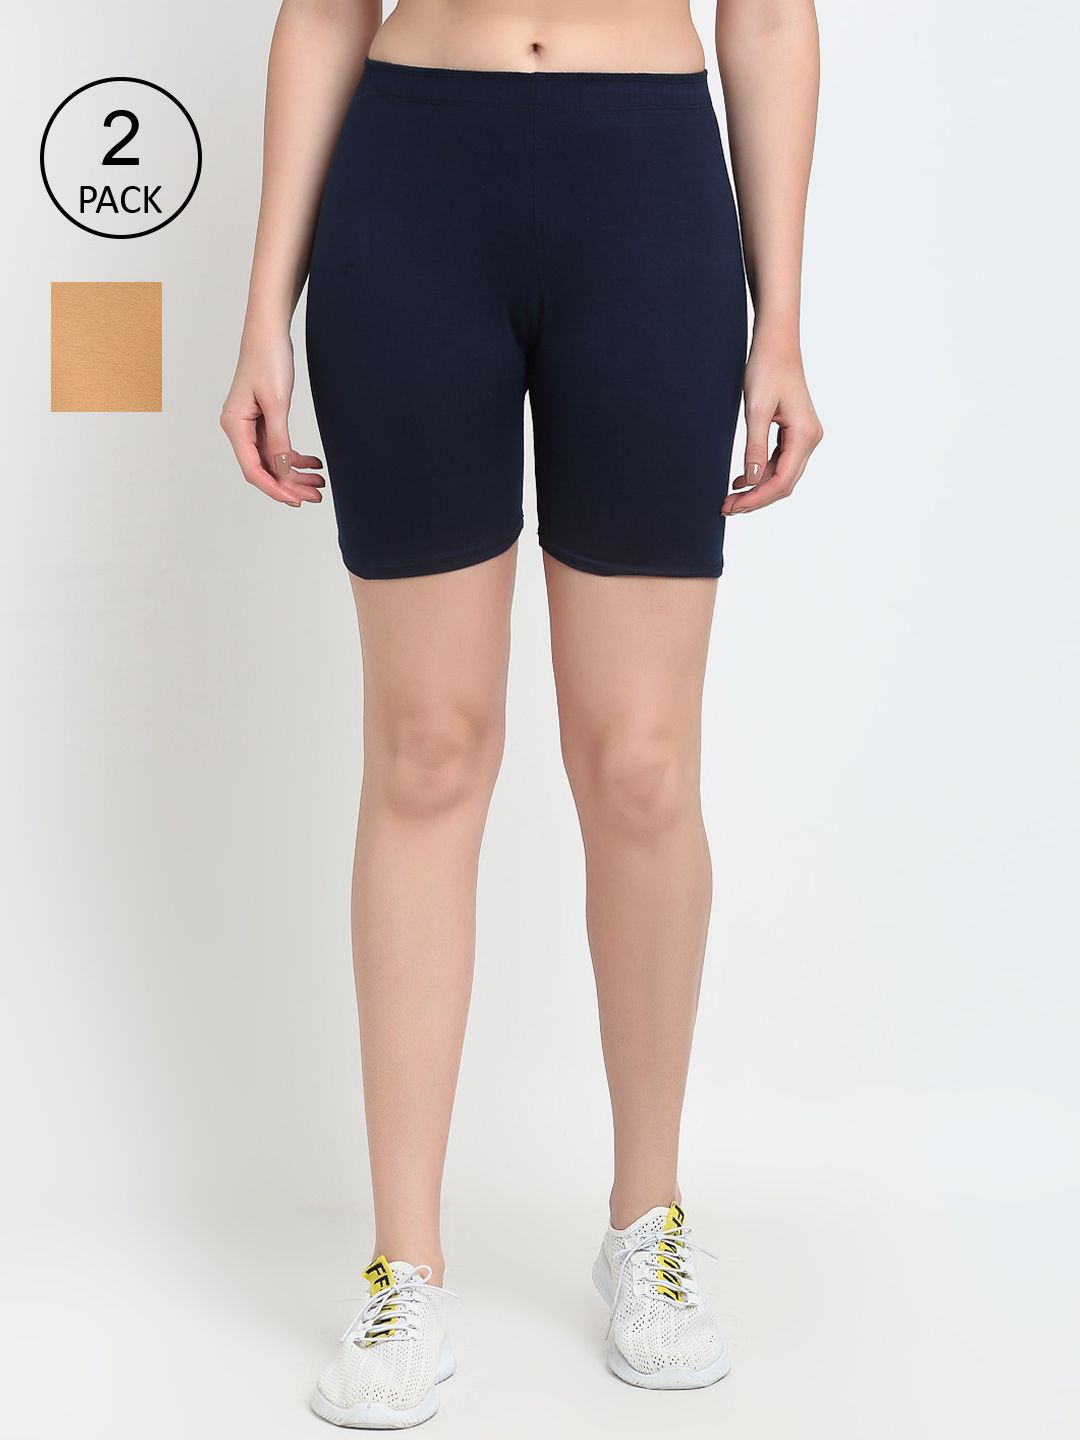 GRACIT Women Pack of 2 Beige & Navy Blue Biker Shorts Price in India